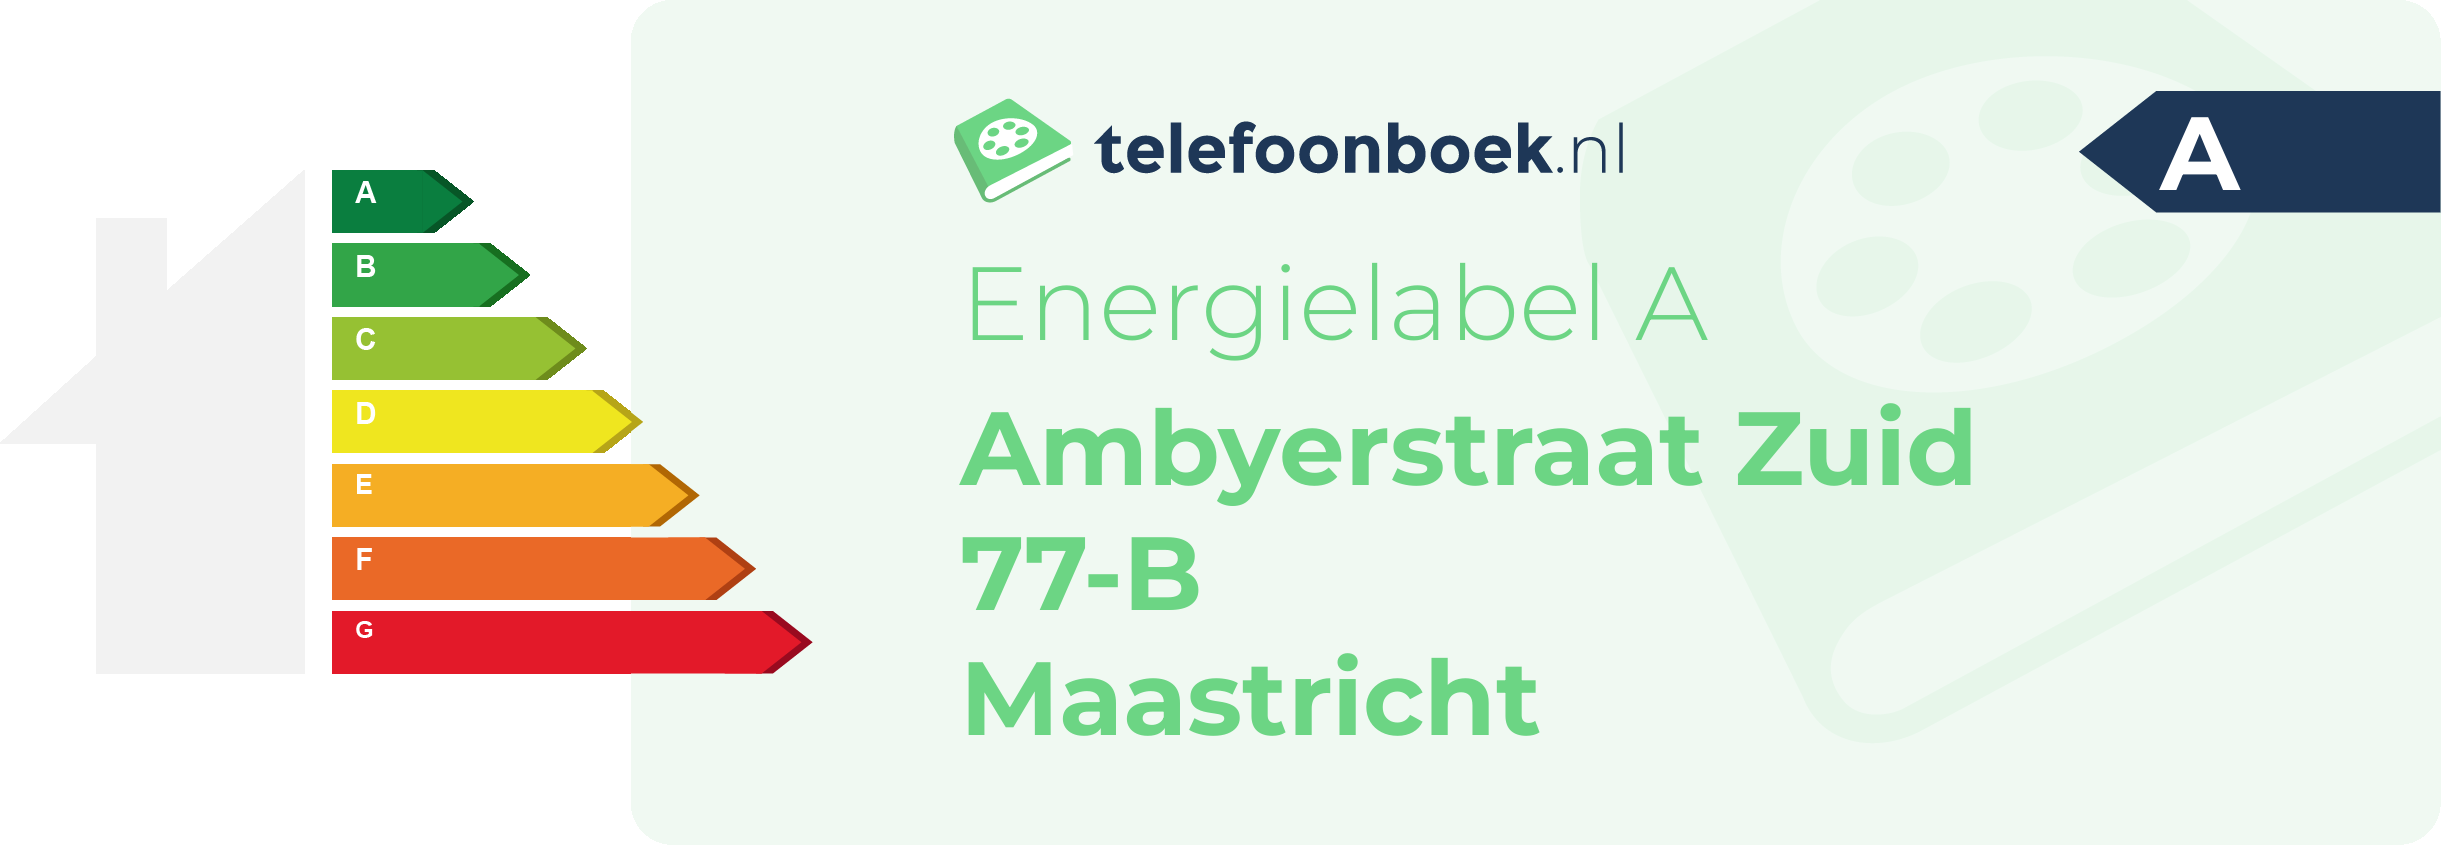 Energielabel Ambyerstraat Zuid 77-B Maastricht